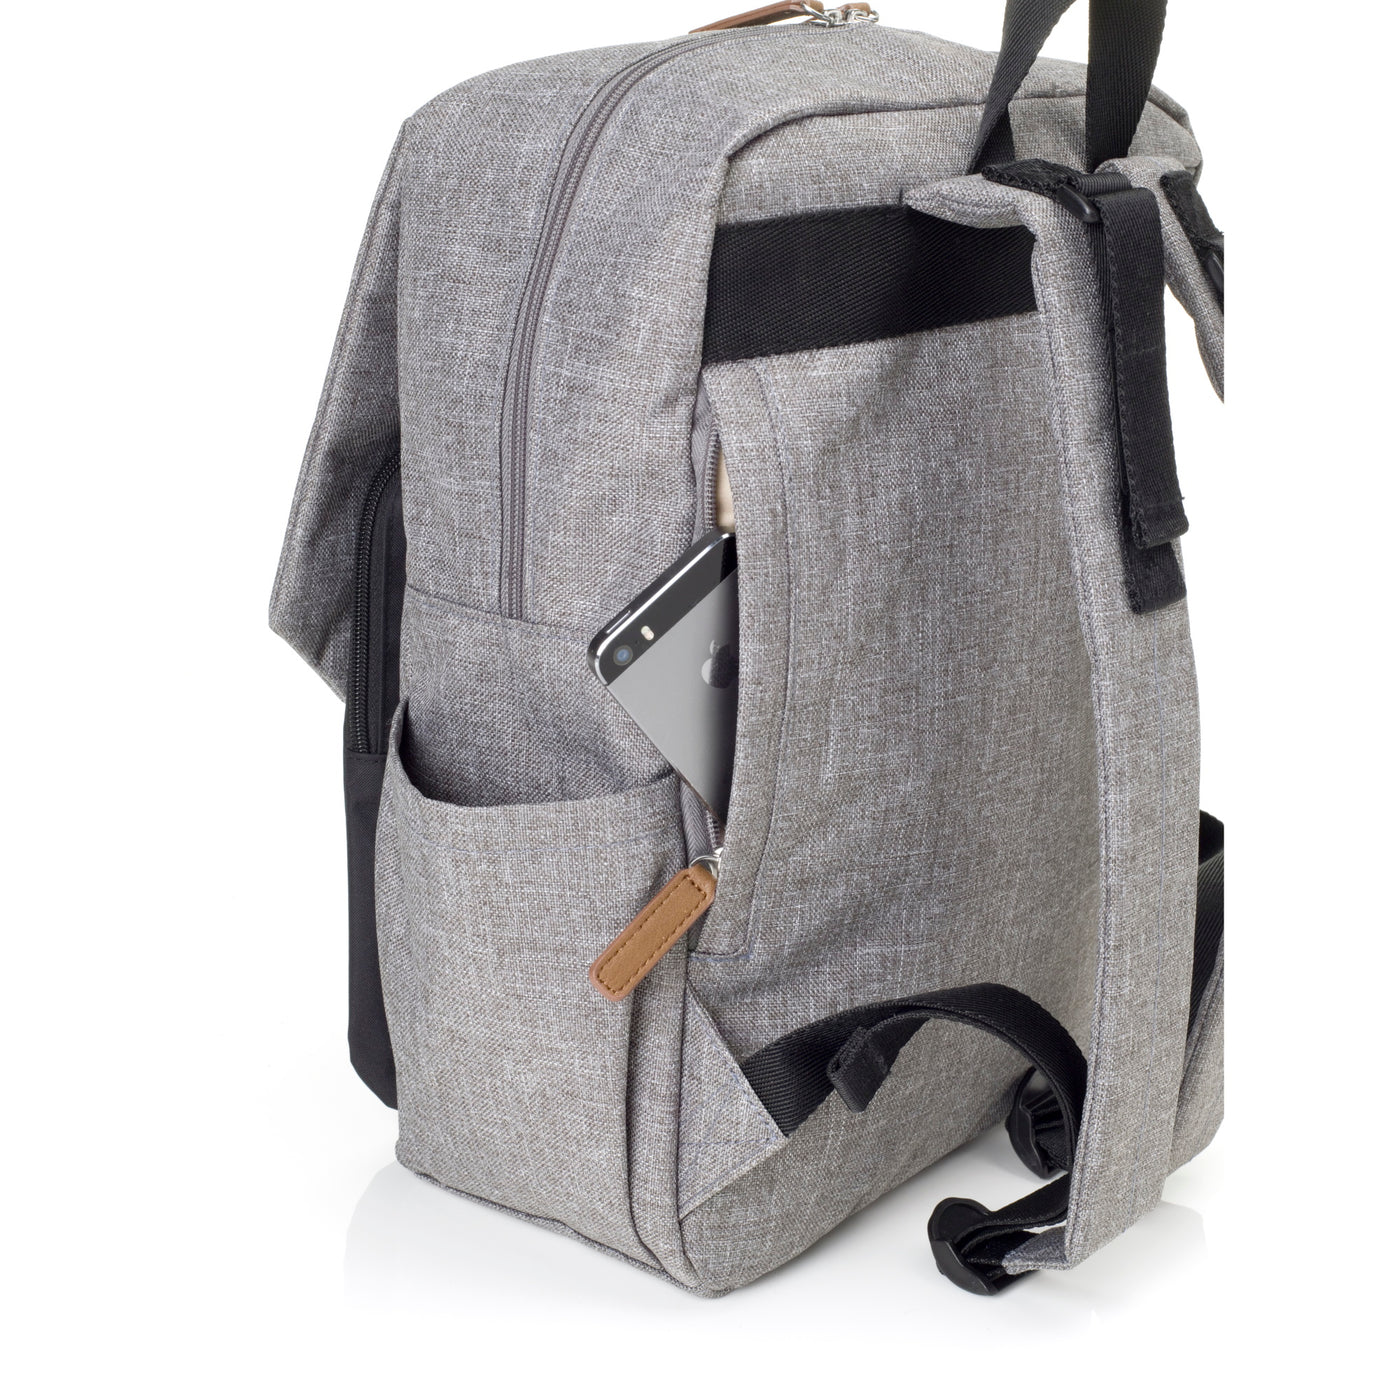 George Backpack Nappy Bag - Black/Grey